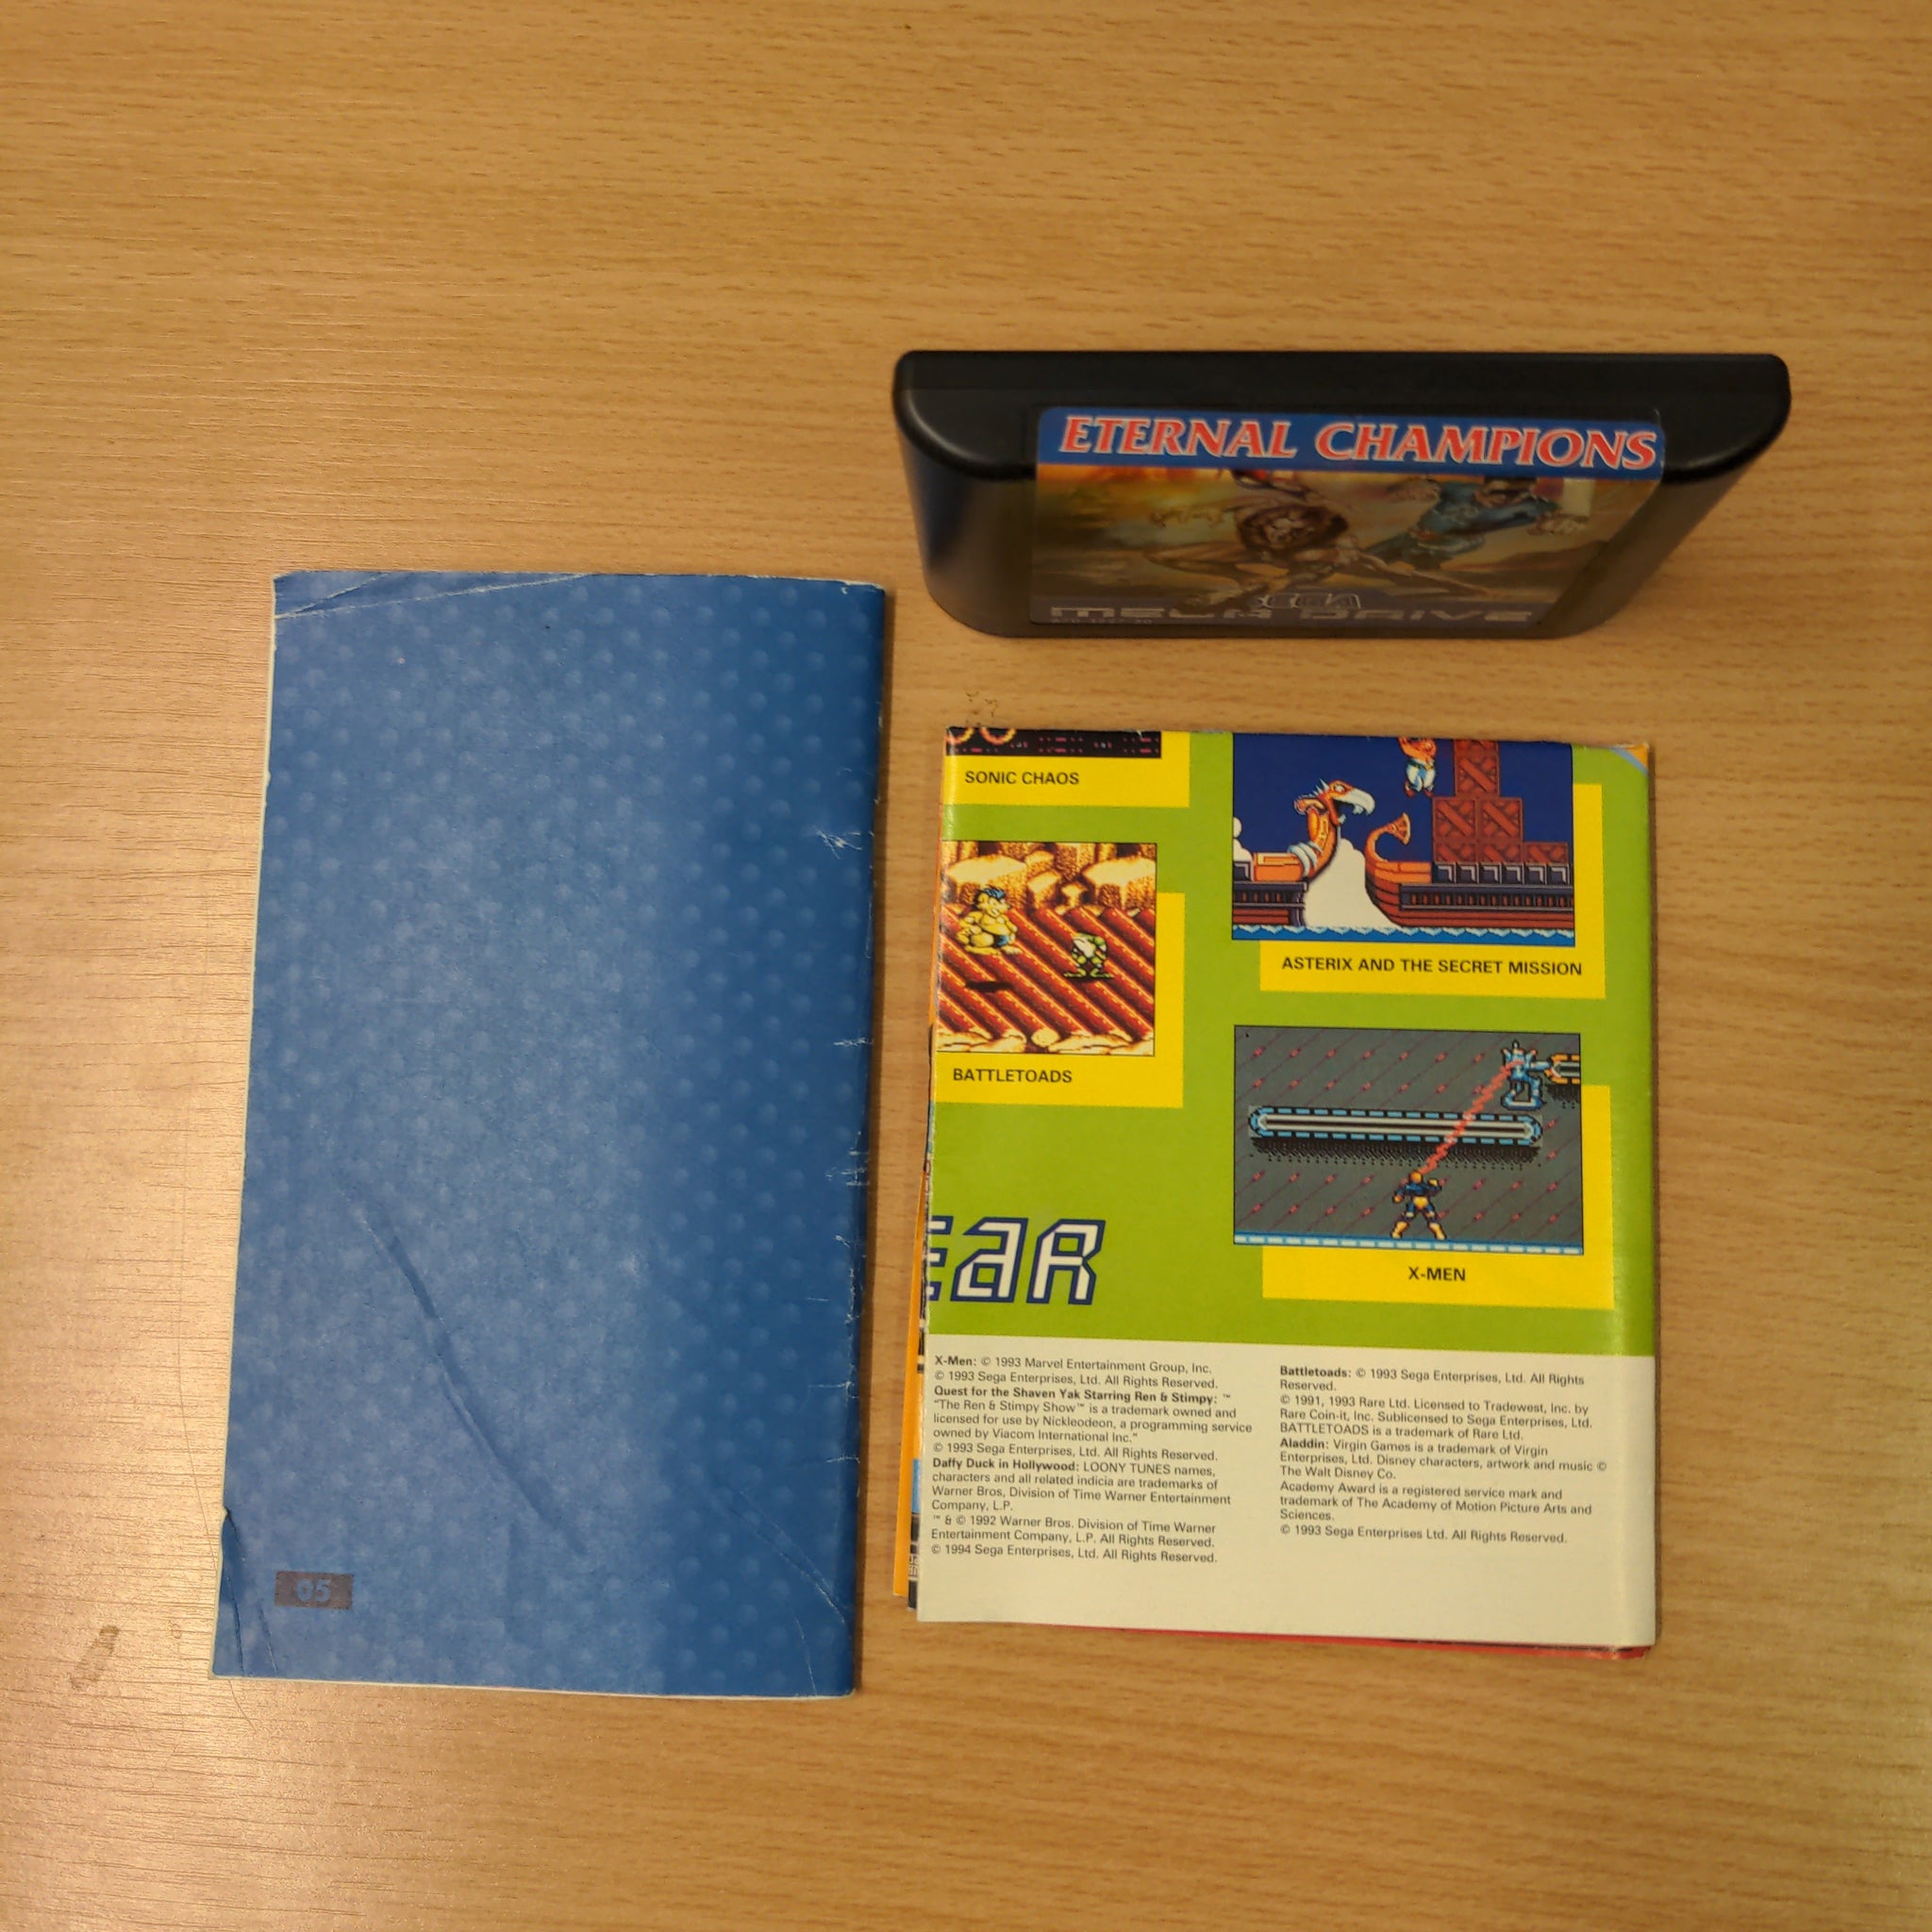 Eternal Champions Sega Mega Drive game complete